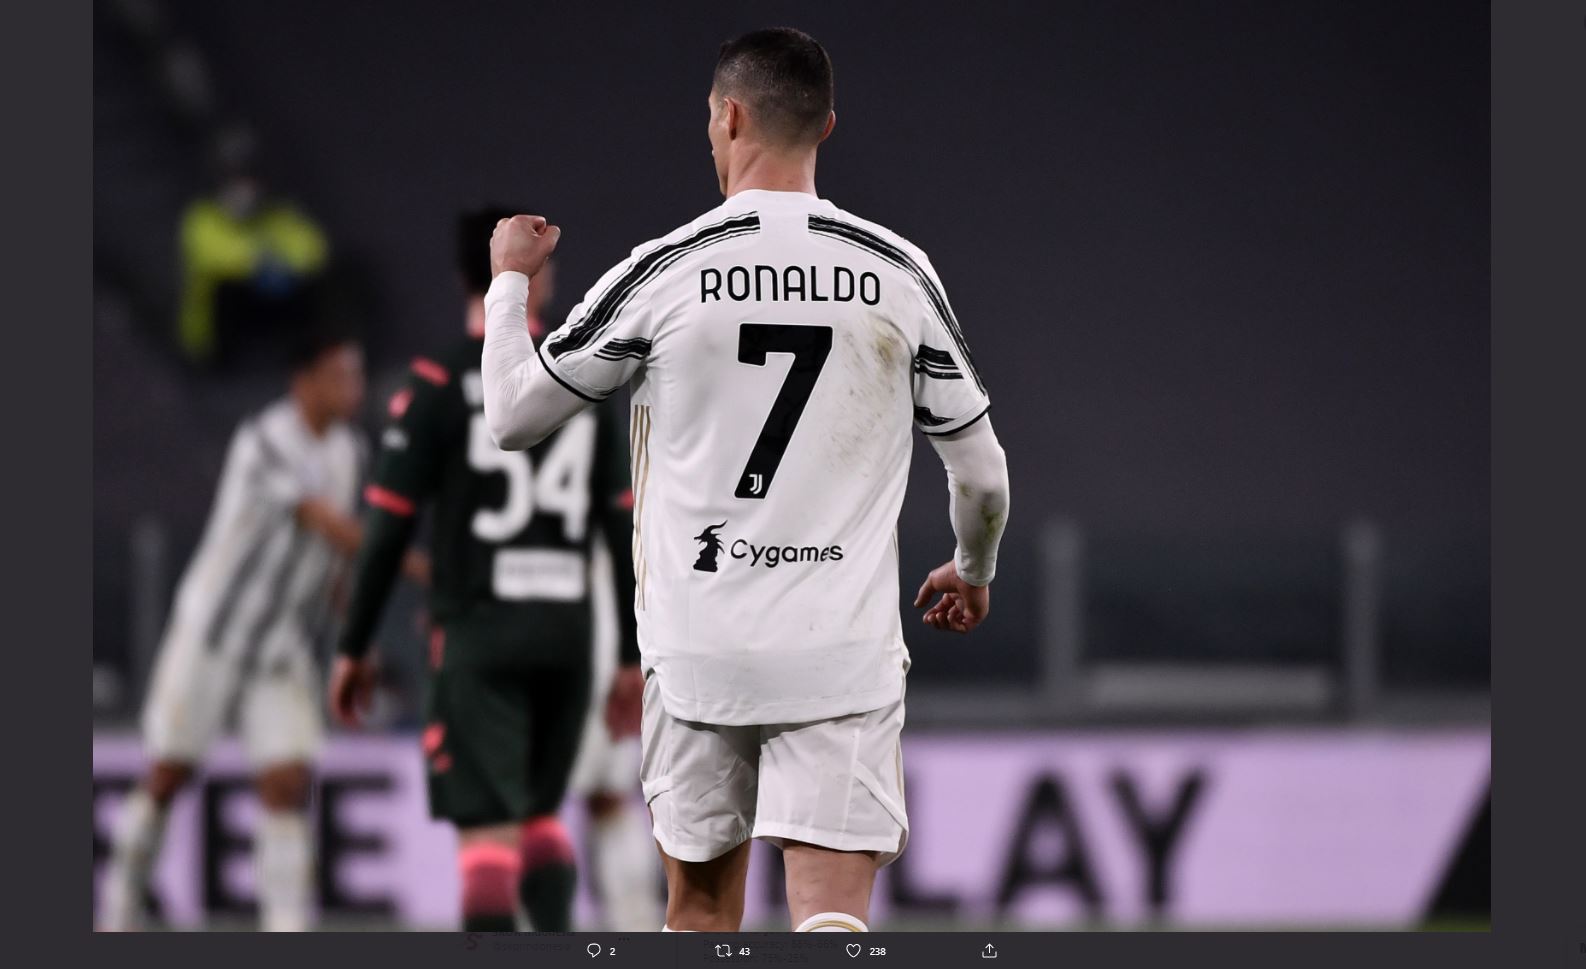 Persebaran 600 Laga Cristiano Ronaldo di Liga: Kasta Ketiga Portugal sampai 3 Liga Top Eropa